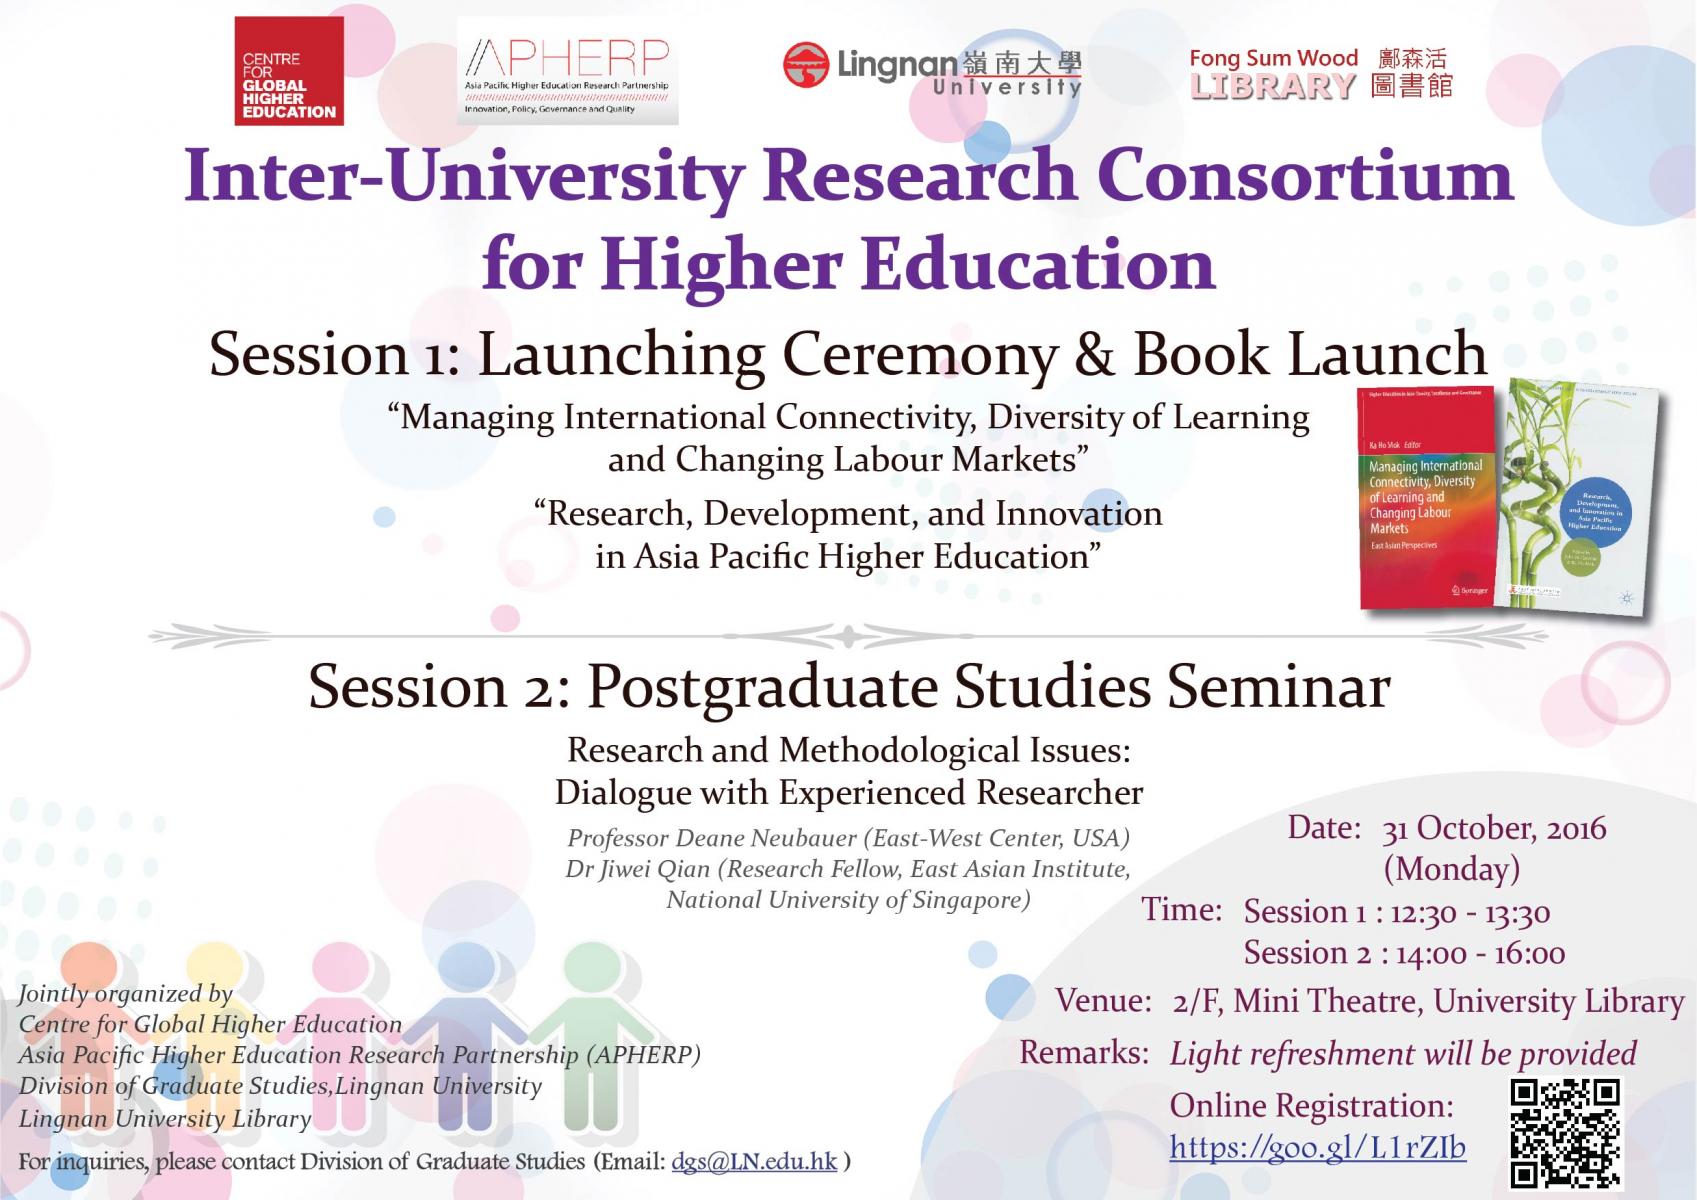 Inter-University Research Consortium for Higher Education Research: Session 2 Postgraduate Studies Seminar